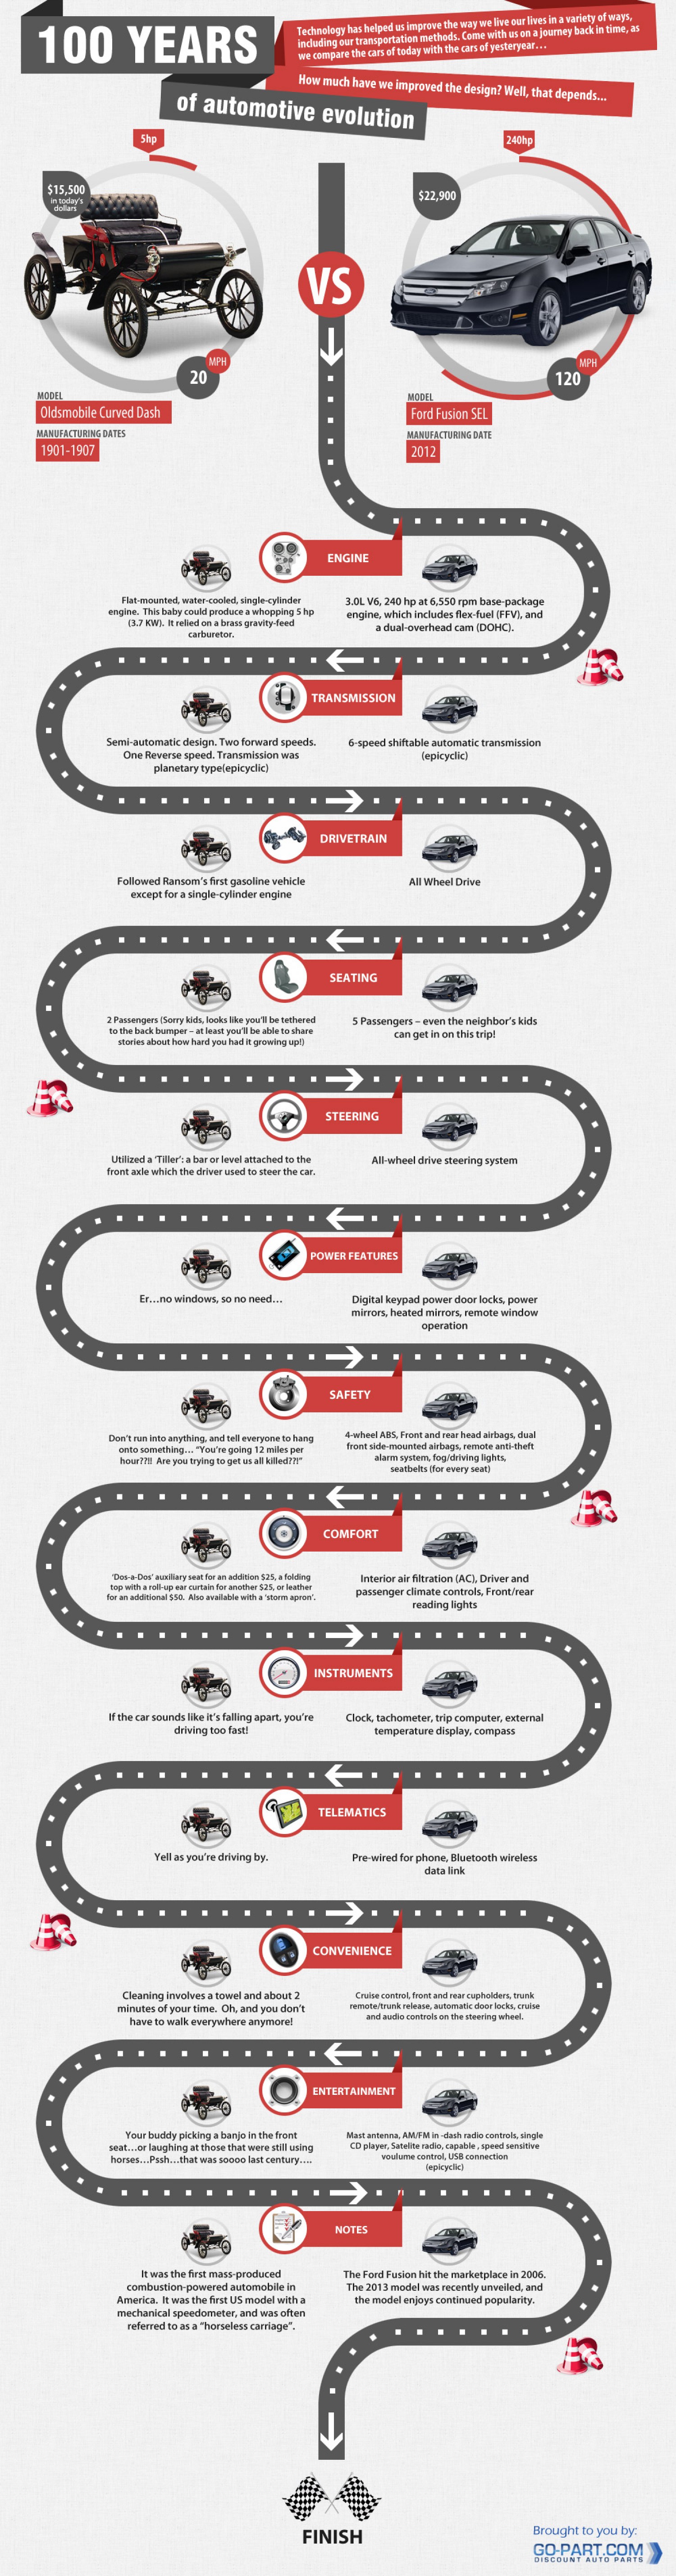 100 Years of Automotive Evolution